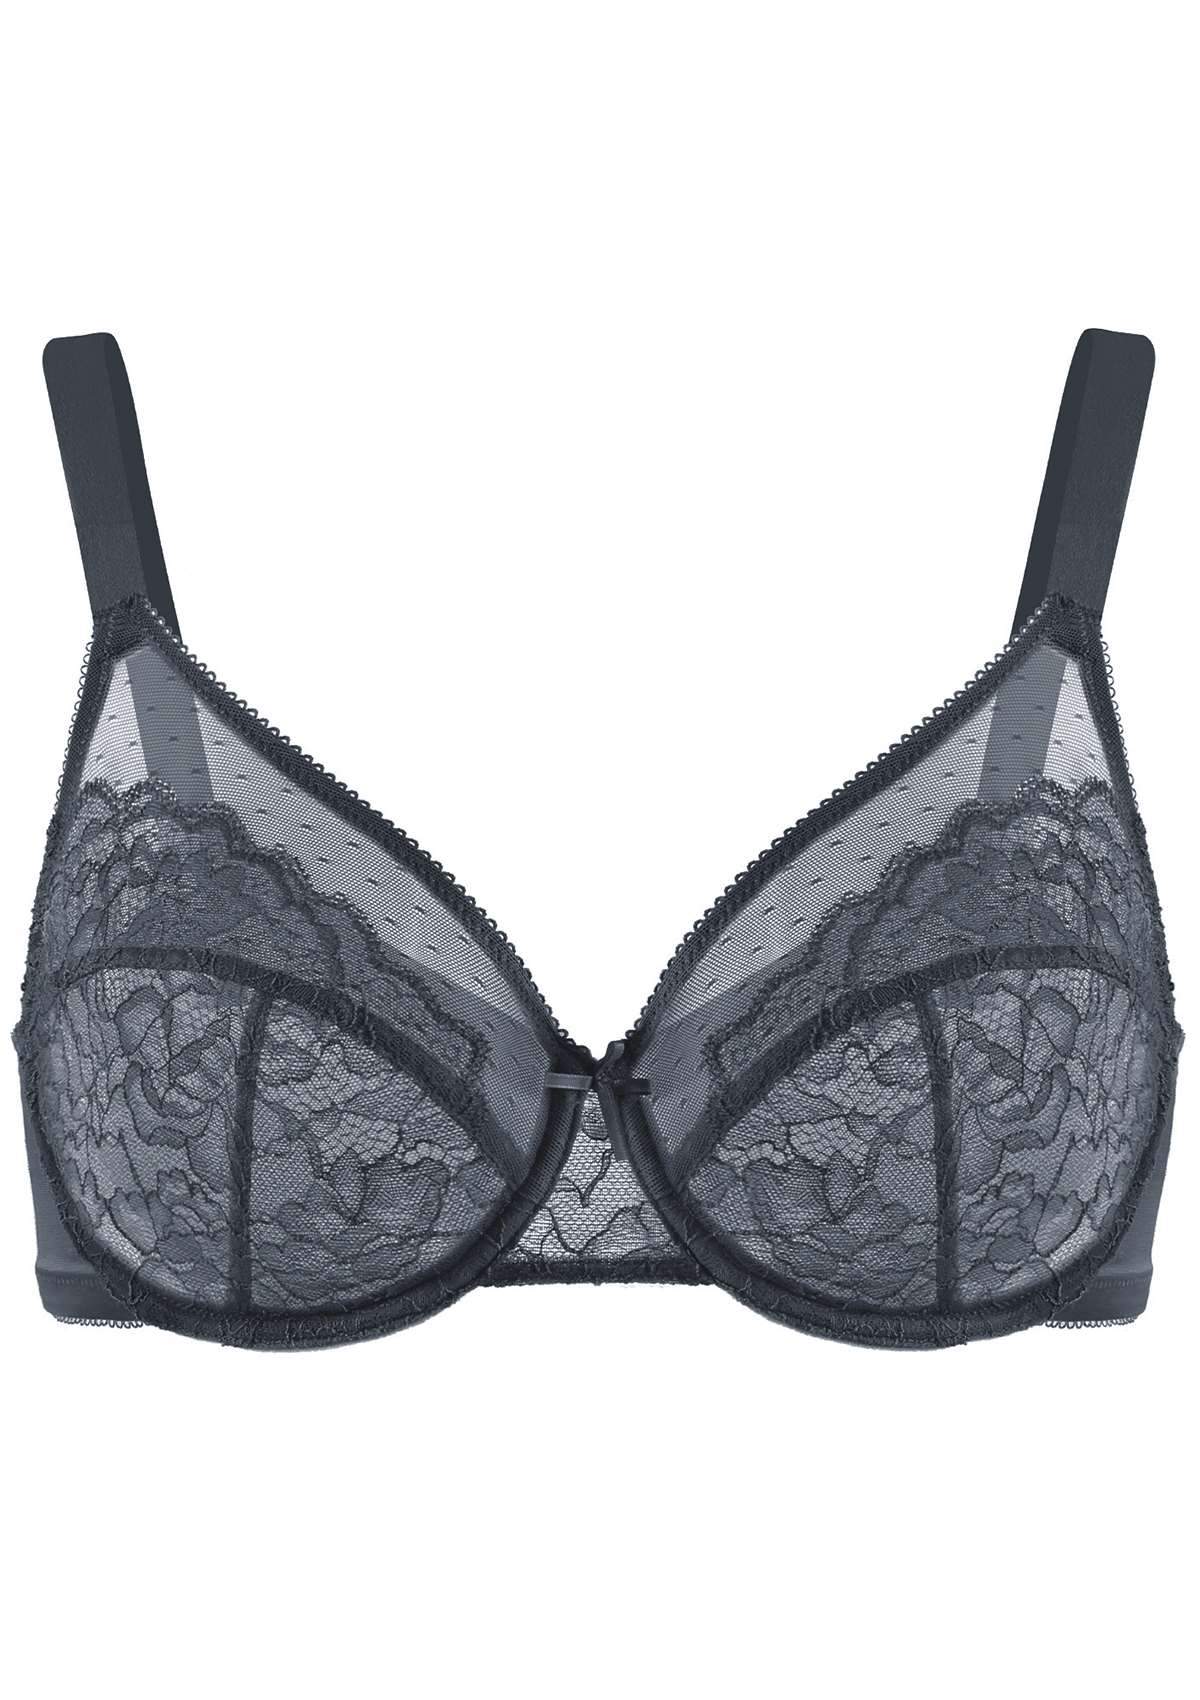 HSIA Enchante Matching Bra And Underwear Sets: Uplift Big Boobs Bra - Dark Gray / 38 / D